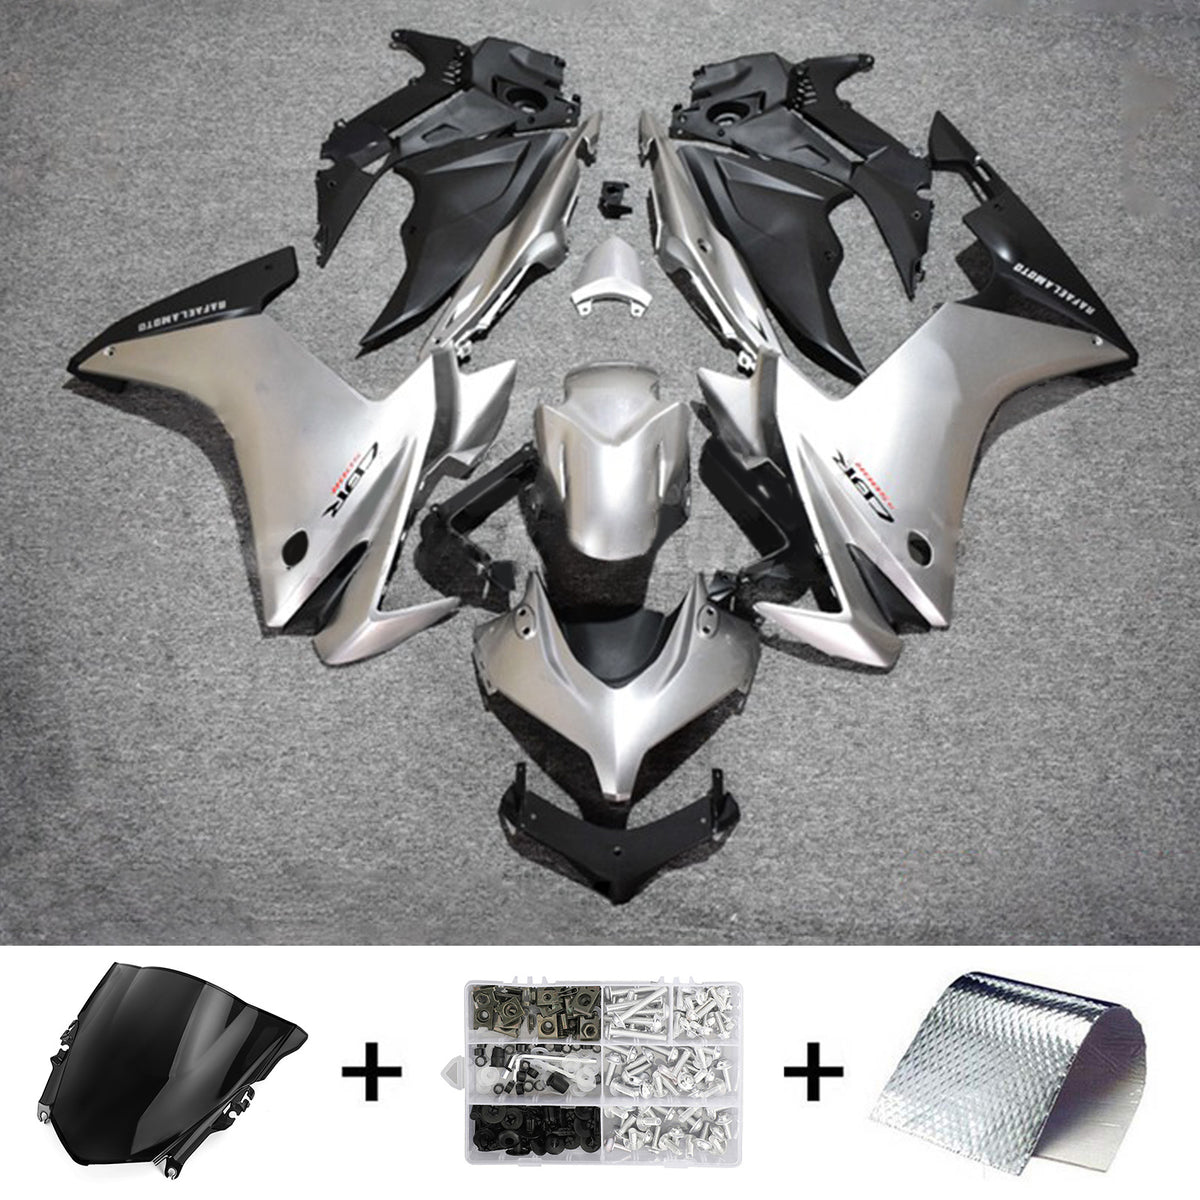 Kit carena Amotopart 2013-2015 CBR500R Honda argento opaco e nero